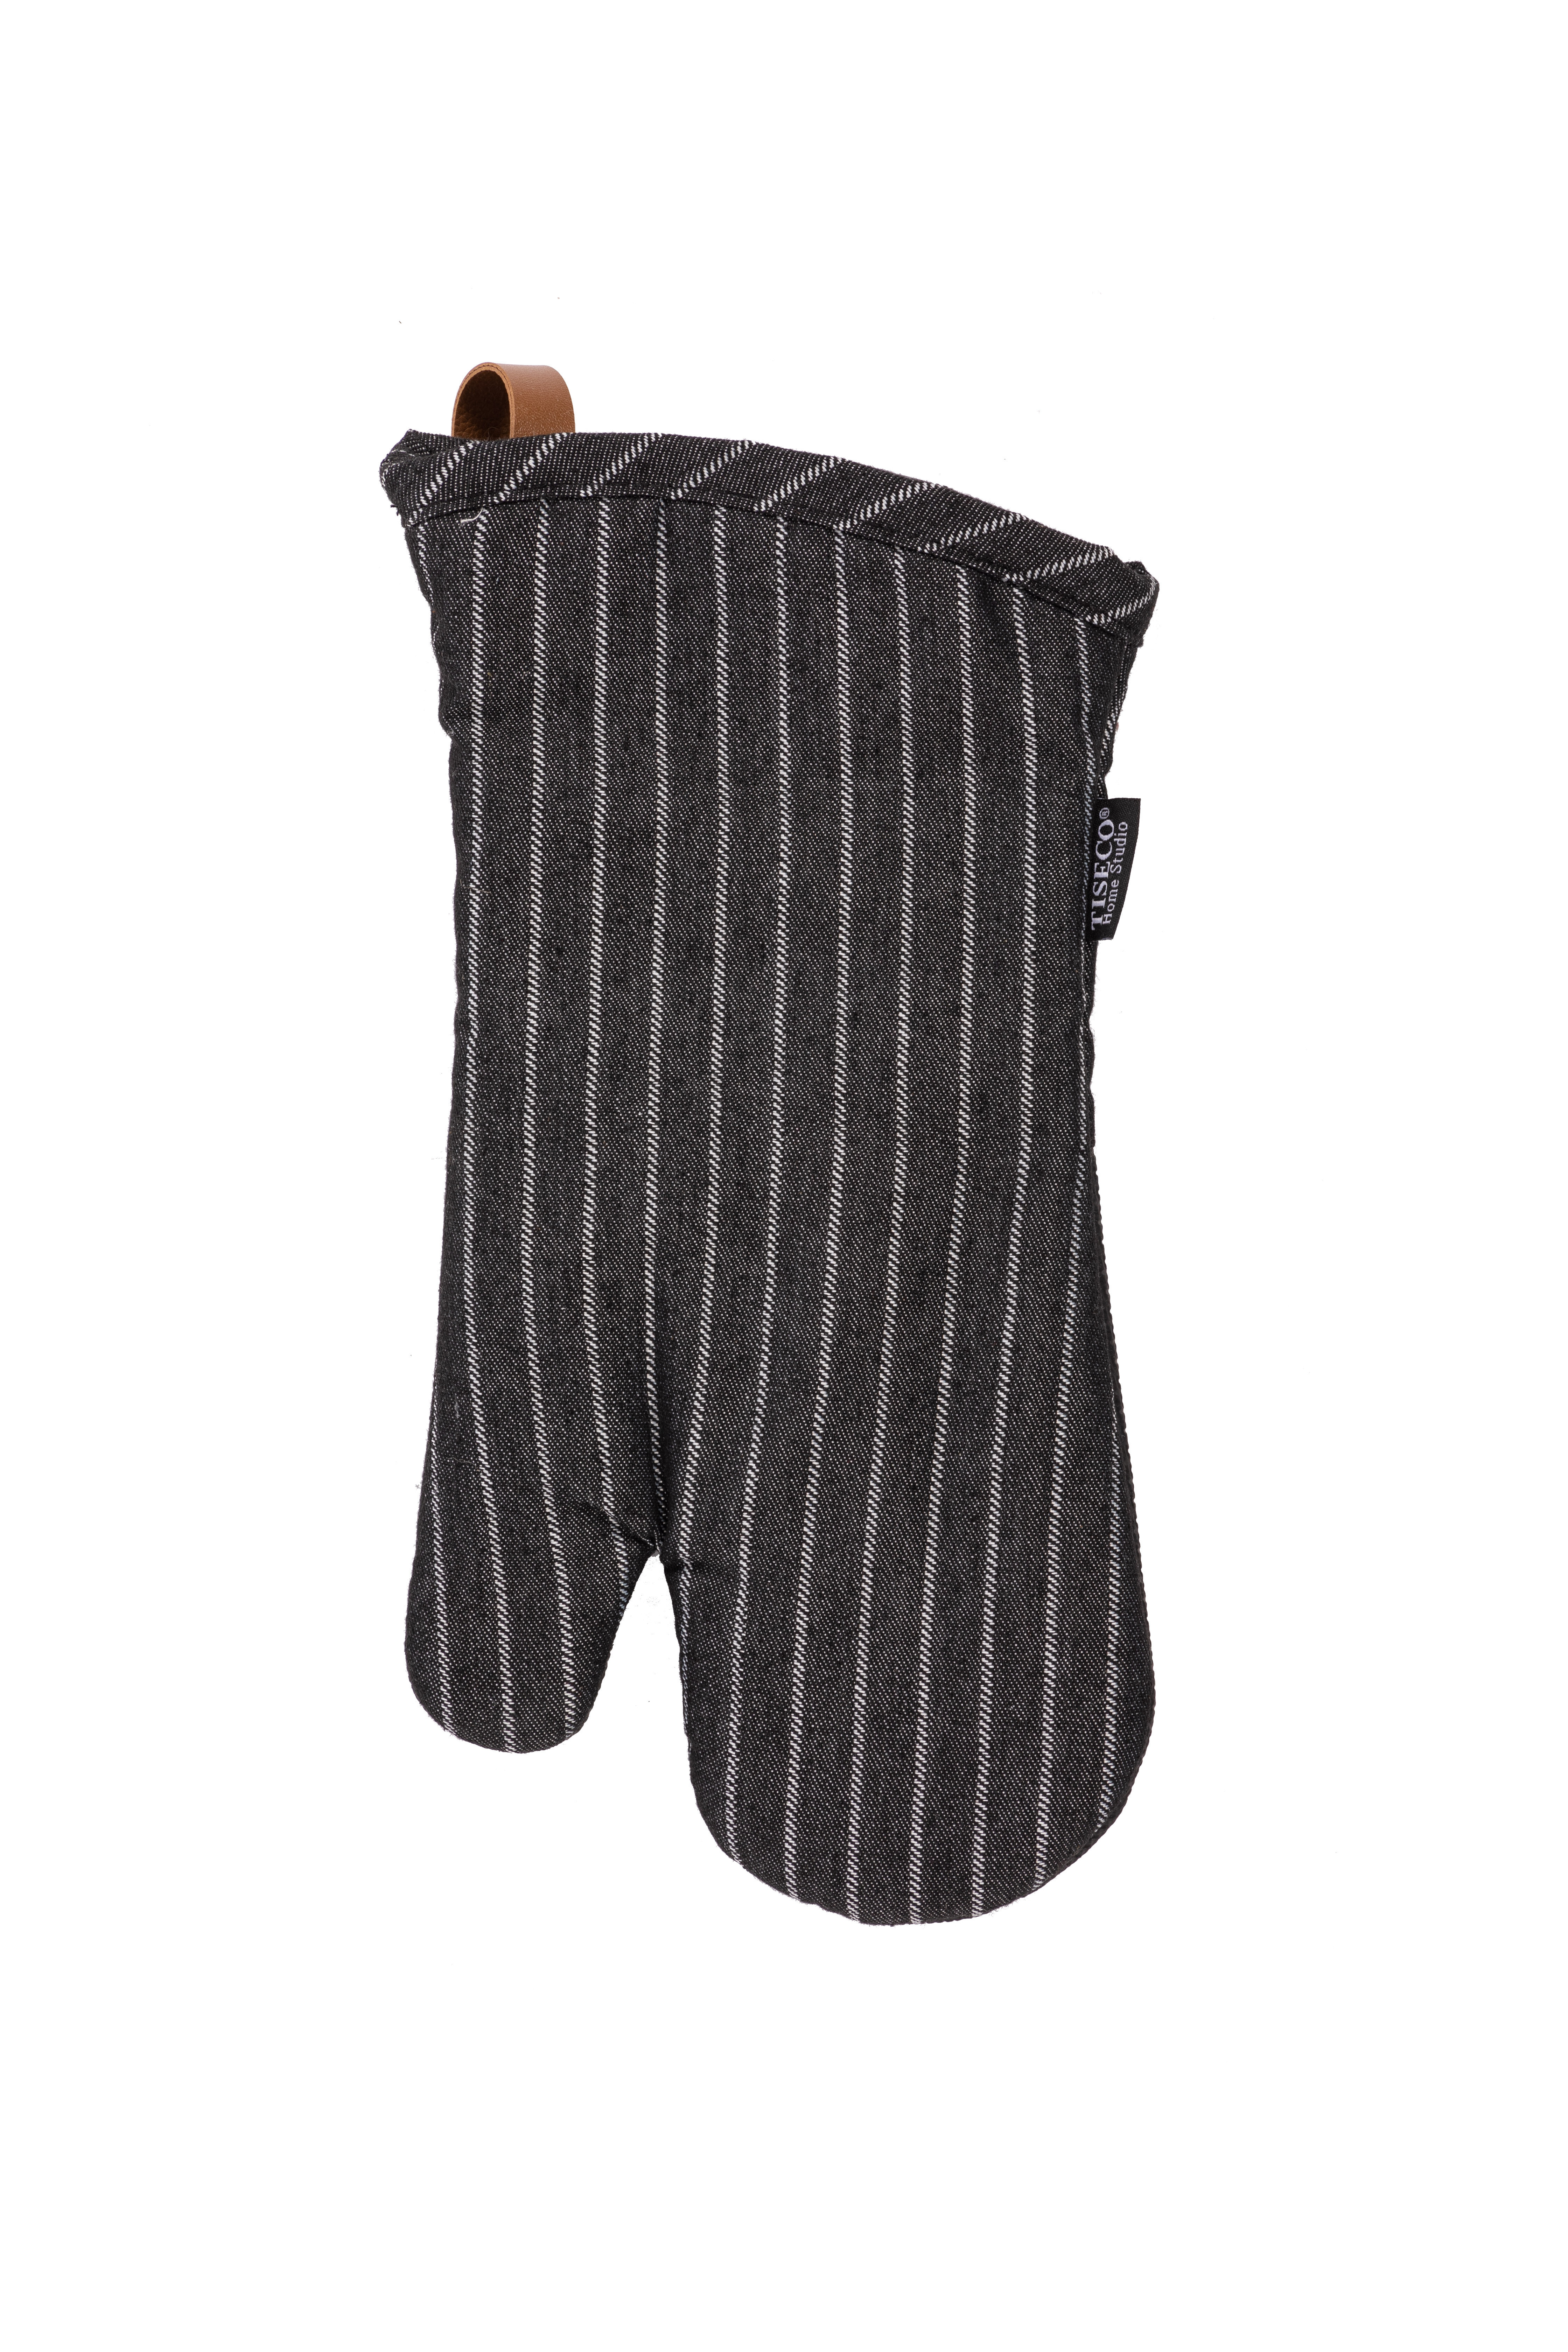 Oven glove (1R + 1L) SHERLOCK Stripe, 17x33cm, black